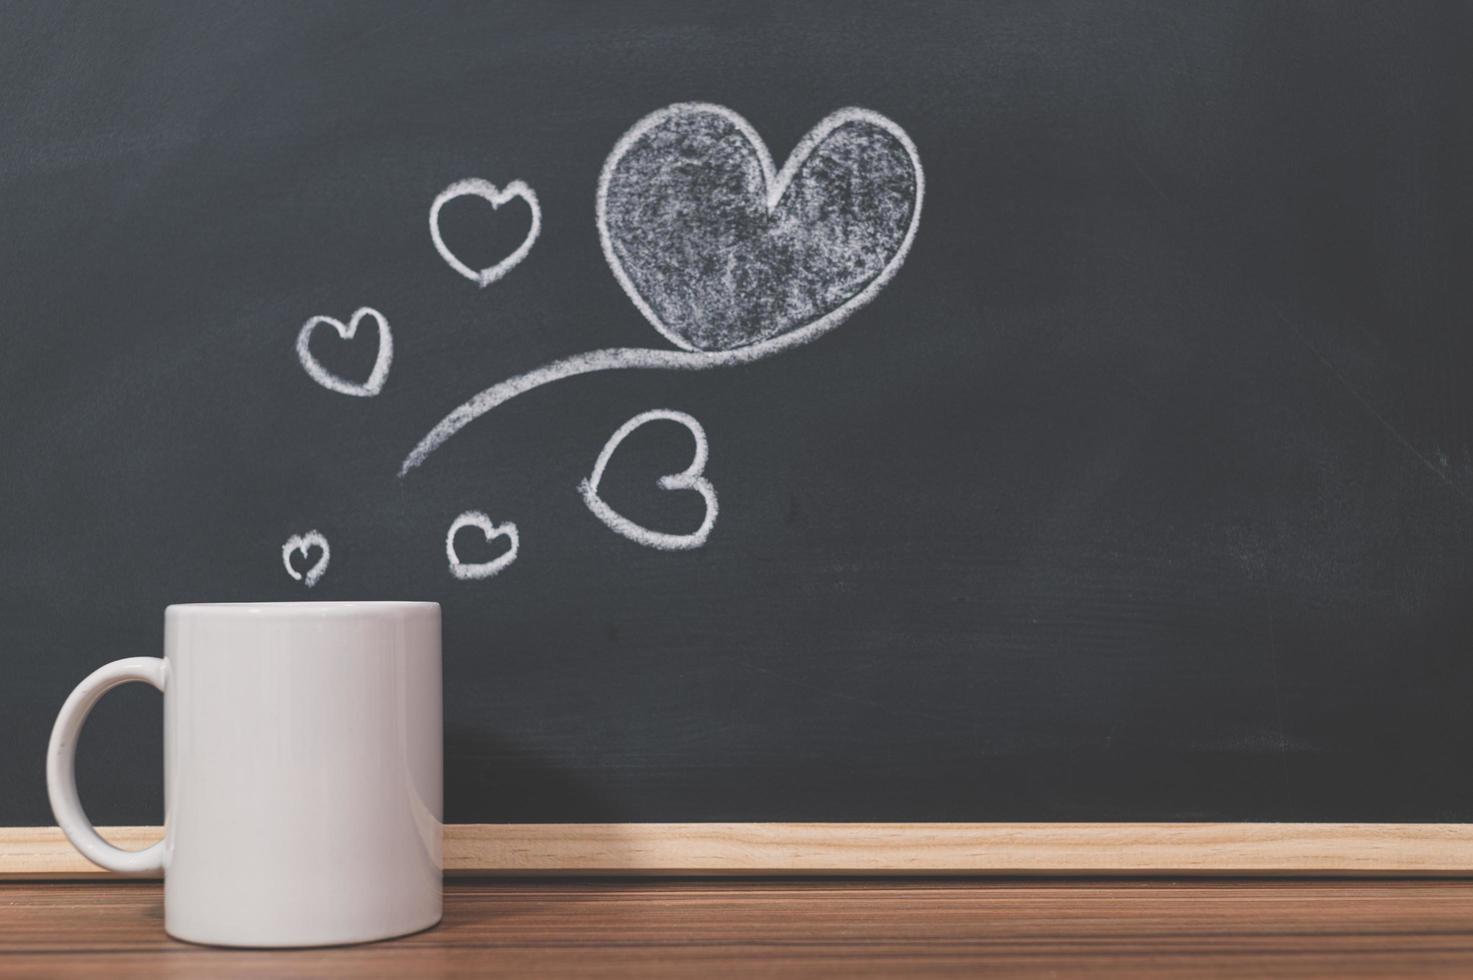 Coffee mug and heart doodle on the blackboard photo